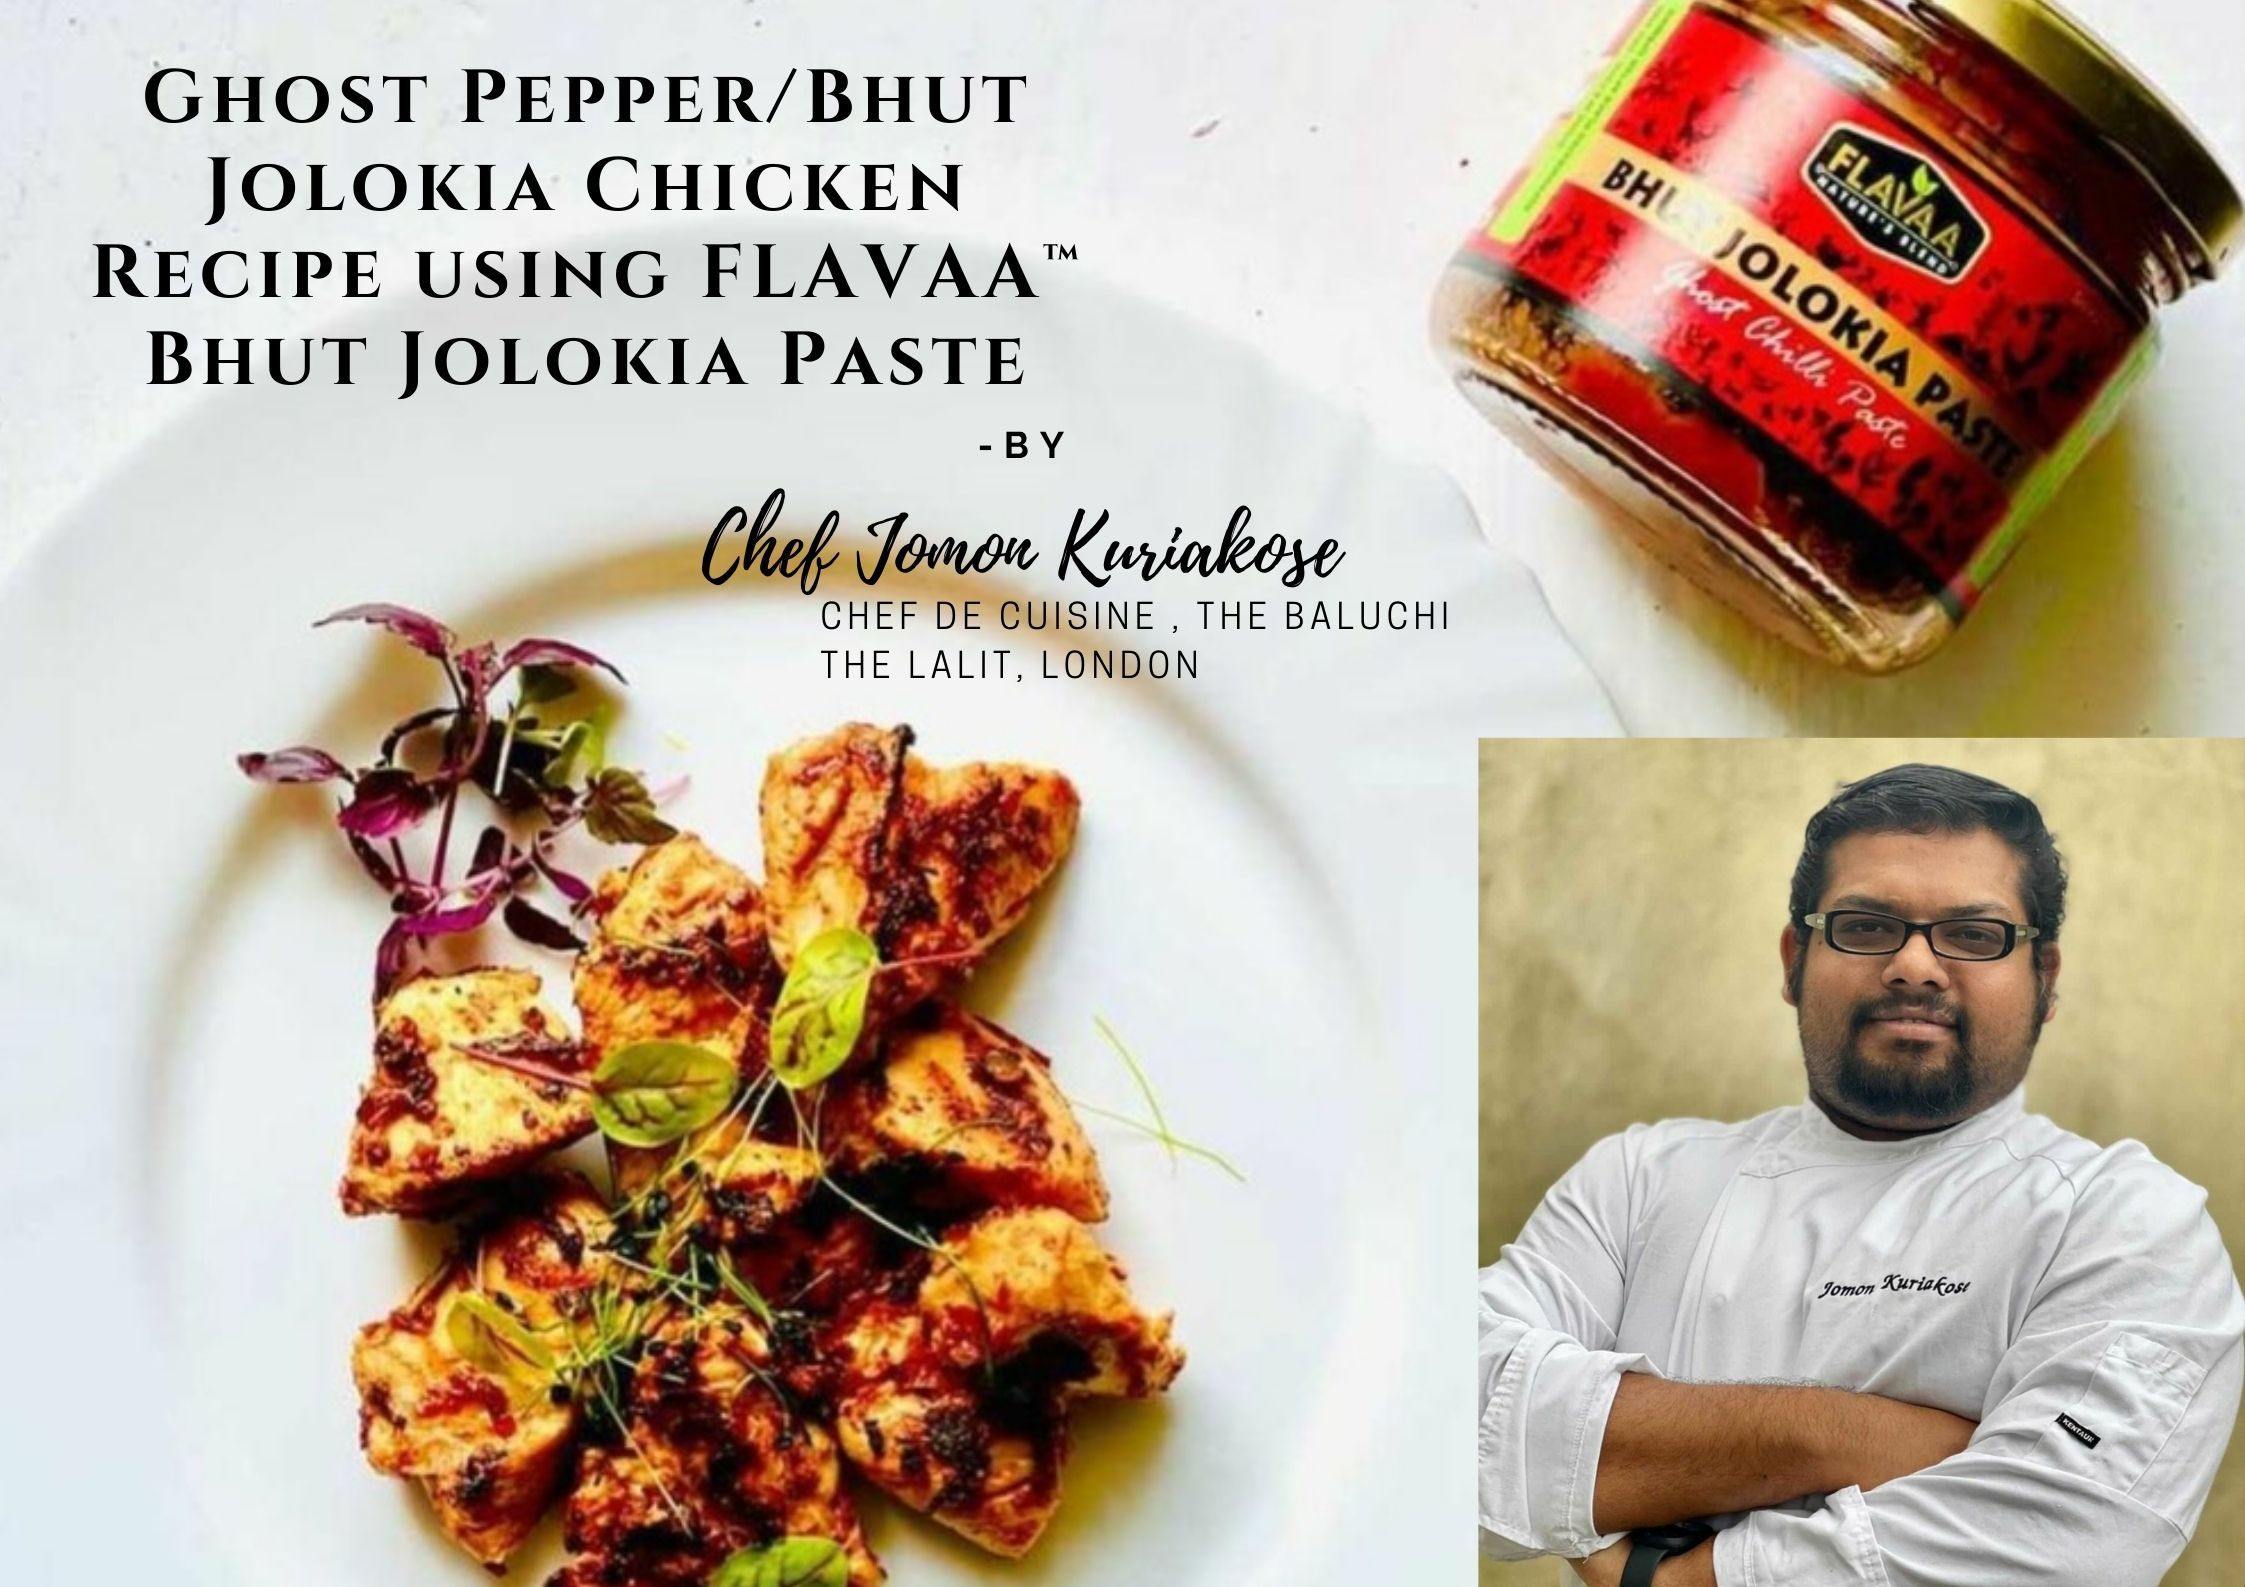 Ghost Pepper/Bhut Jolokia Chicken Recipe by Chef Jomon Kuriakose - Flavaa India